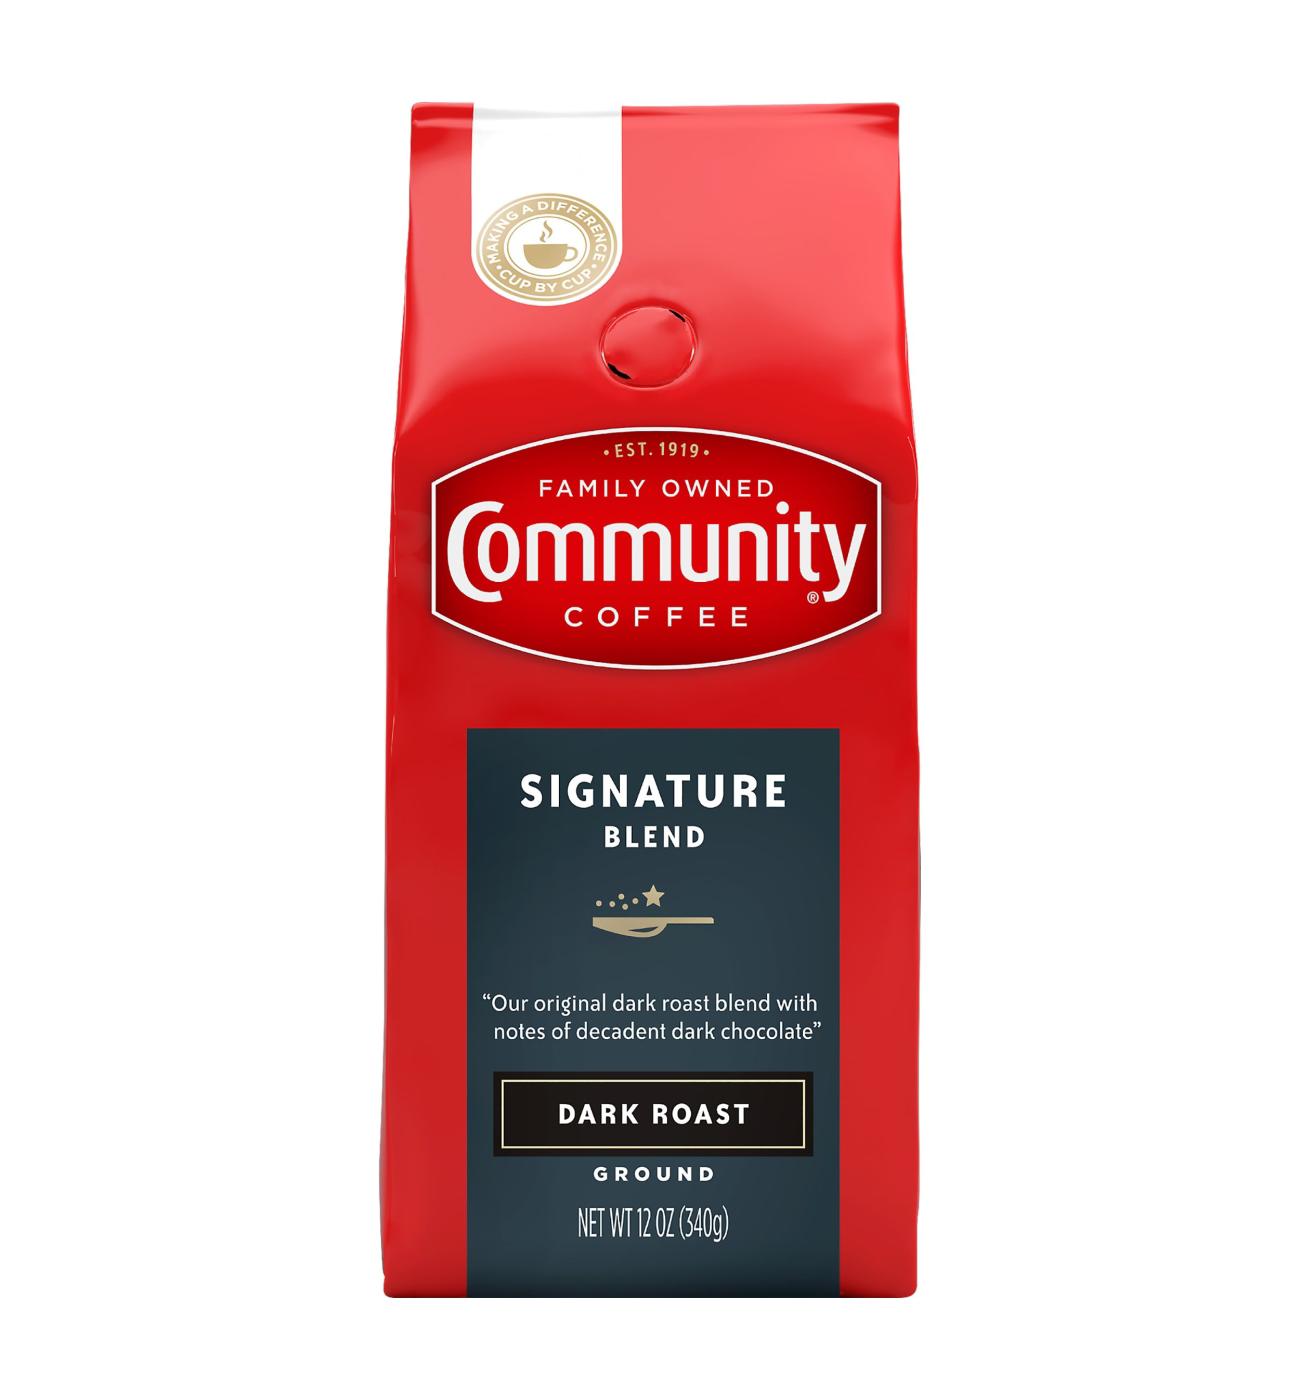 Community Coffee Signature Blend Dark Roast Ground Coffee; image 2 of 2